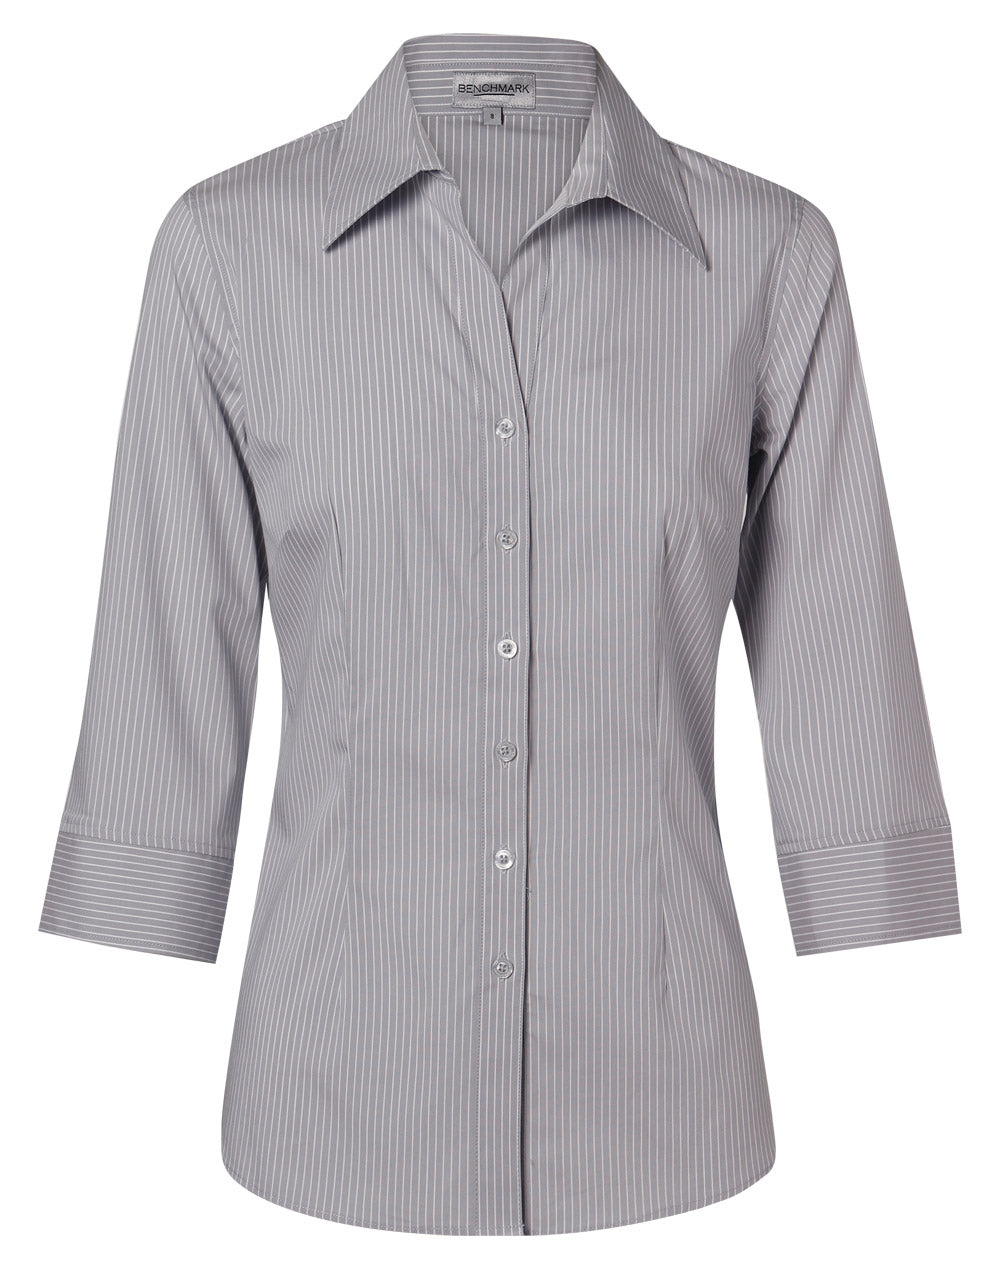 Benchmark M8200Q Women's Ticking Stripe 3/4 Sleeve Shirt